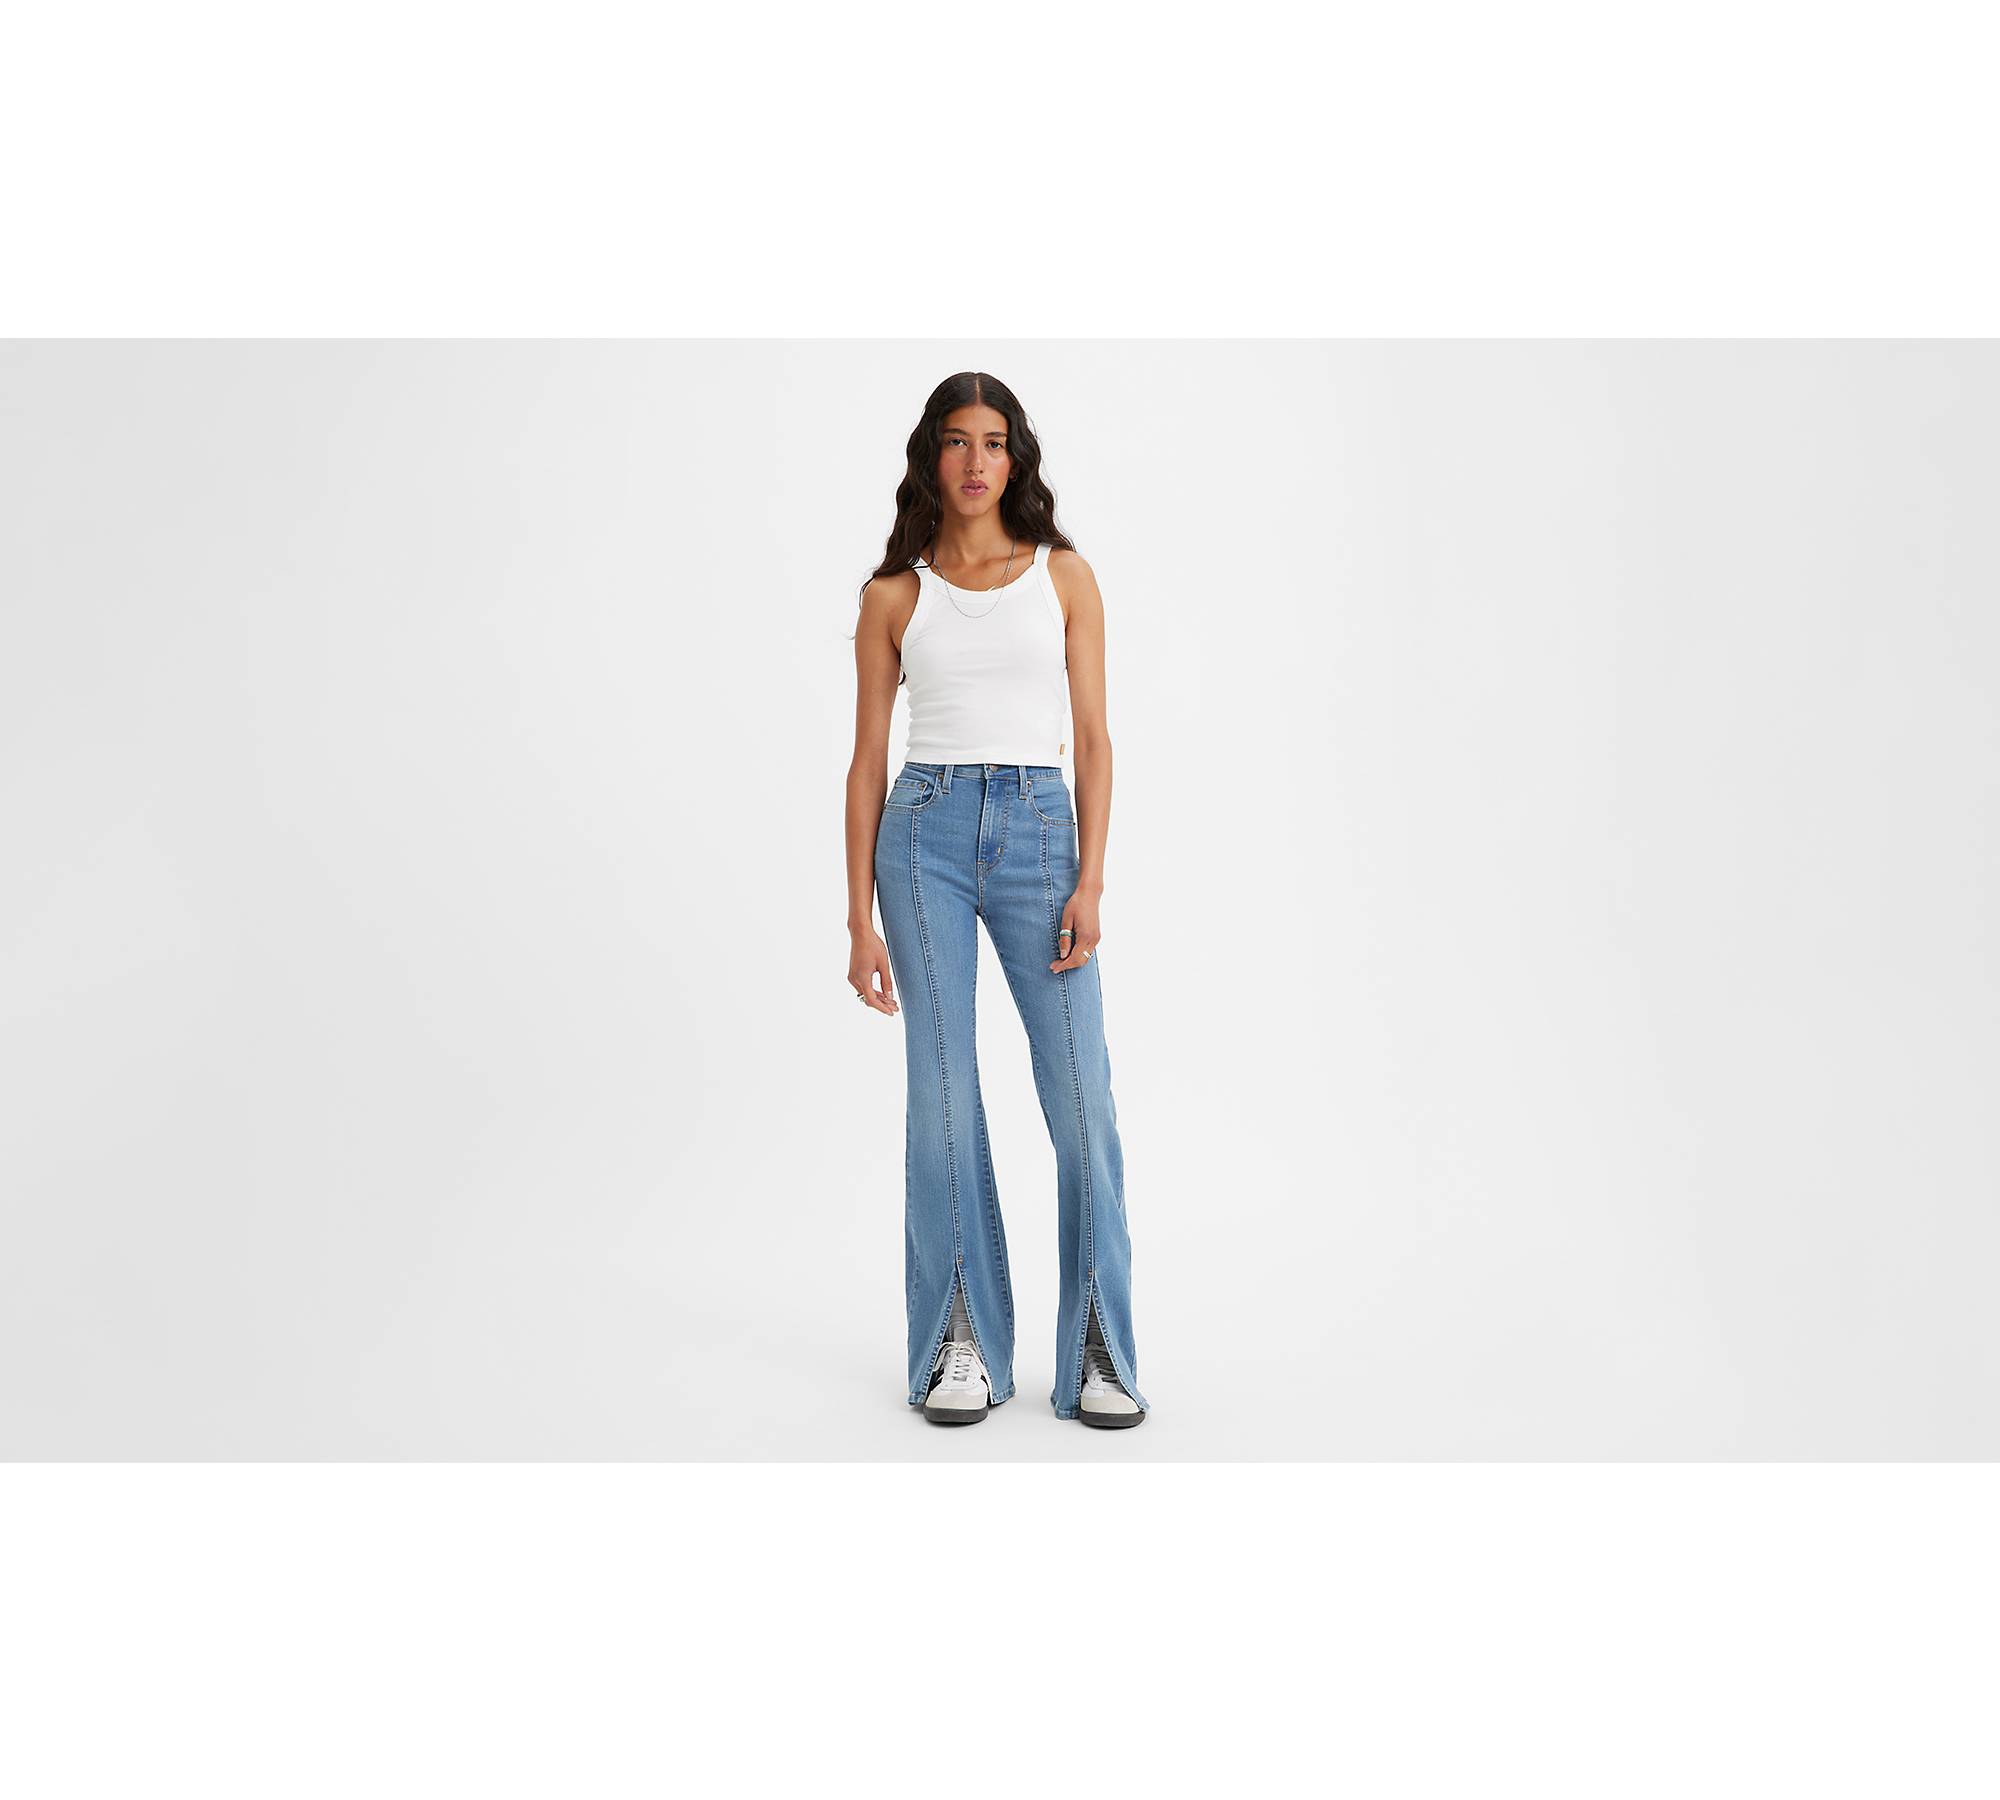 Medium-rise flared jeans - Women